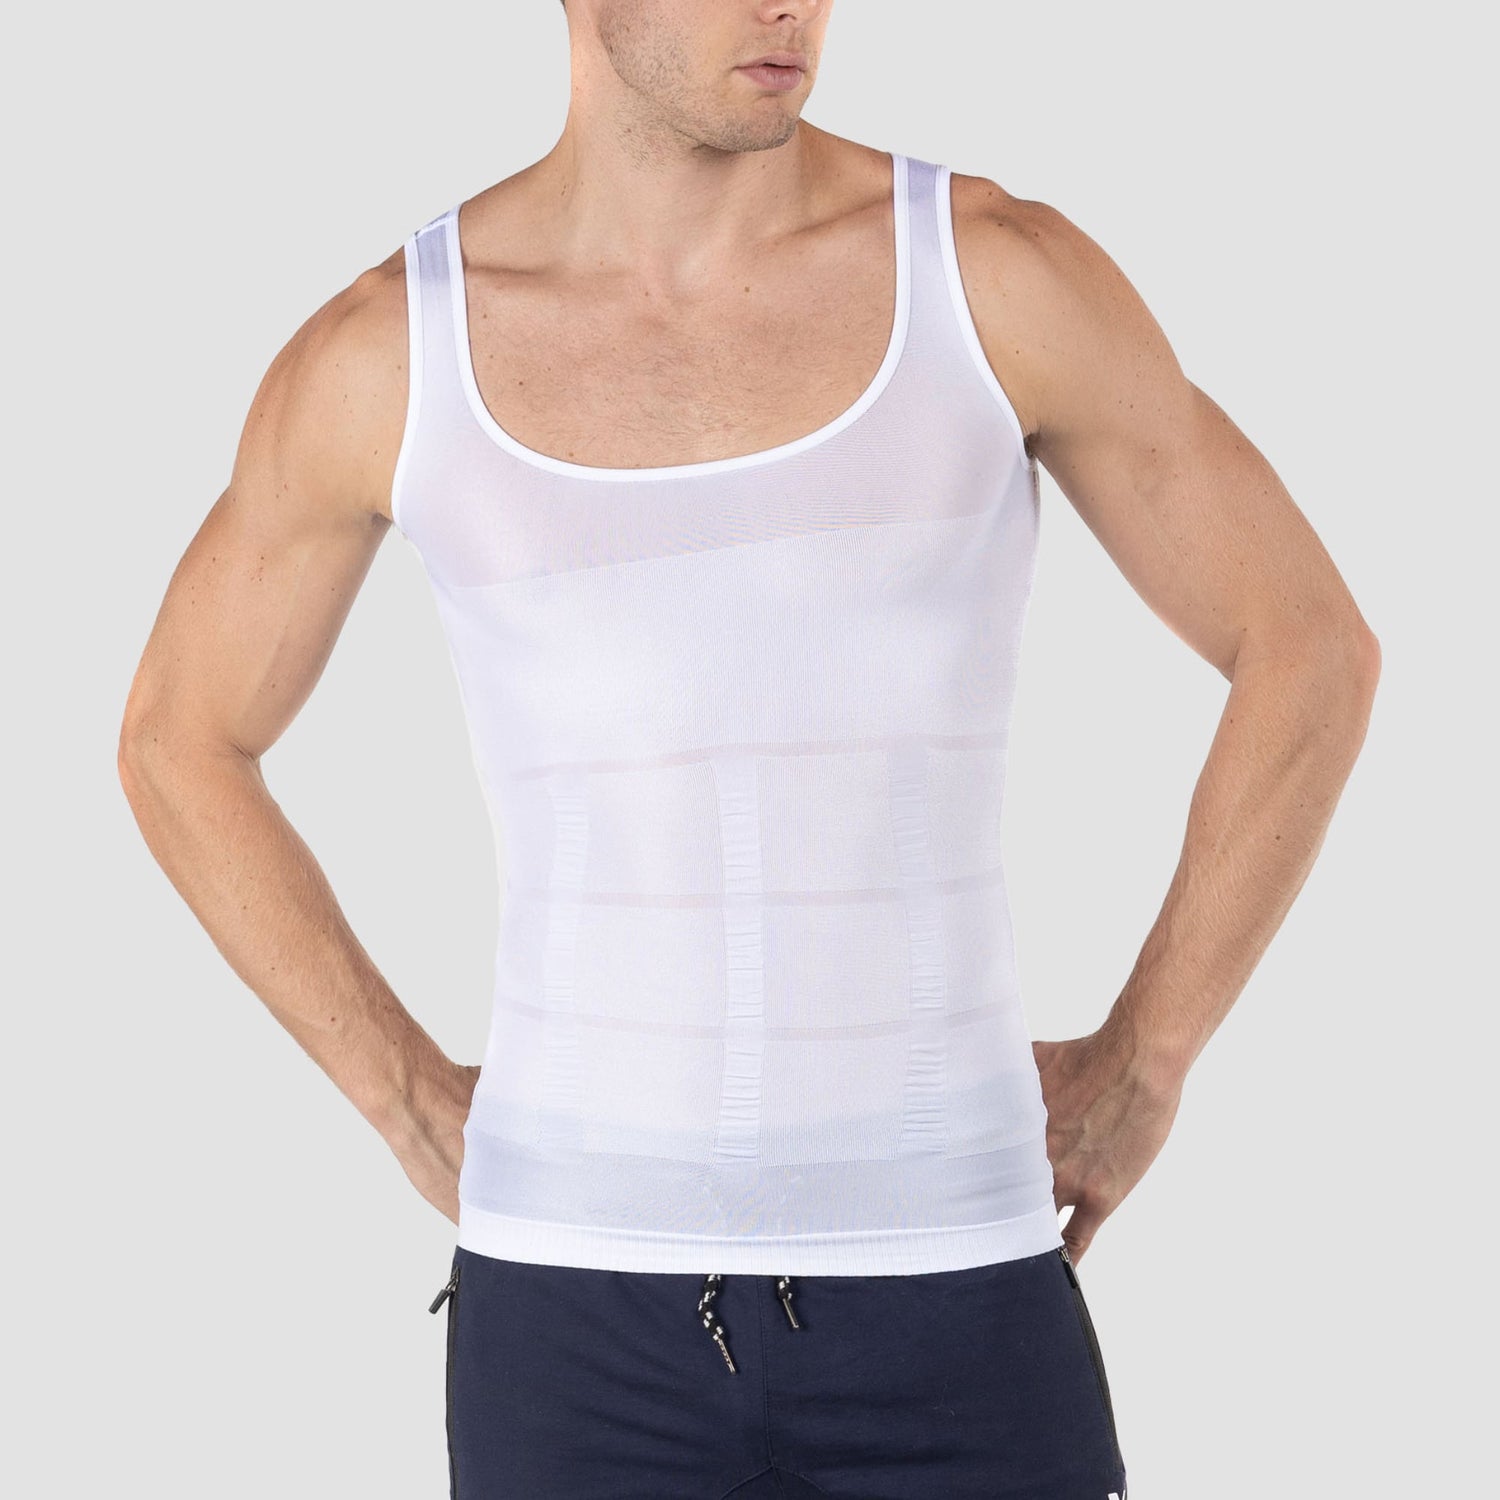 FITLIFT Men's Slimming Body Slim N Lift Shaper Belly Buster Compression  Underwear Vest (White)